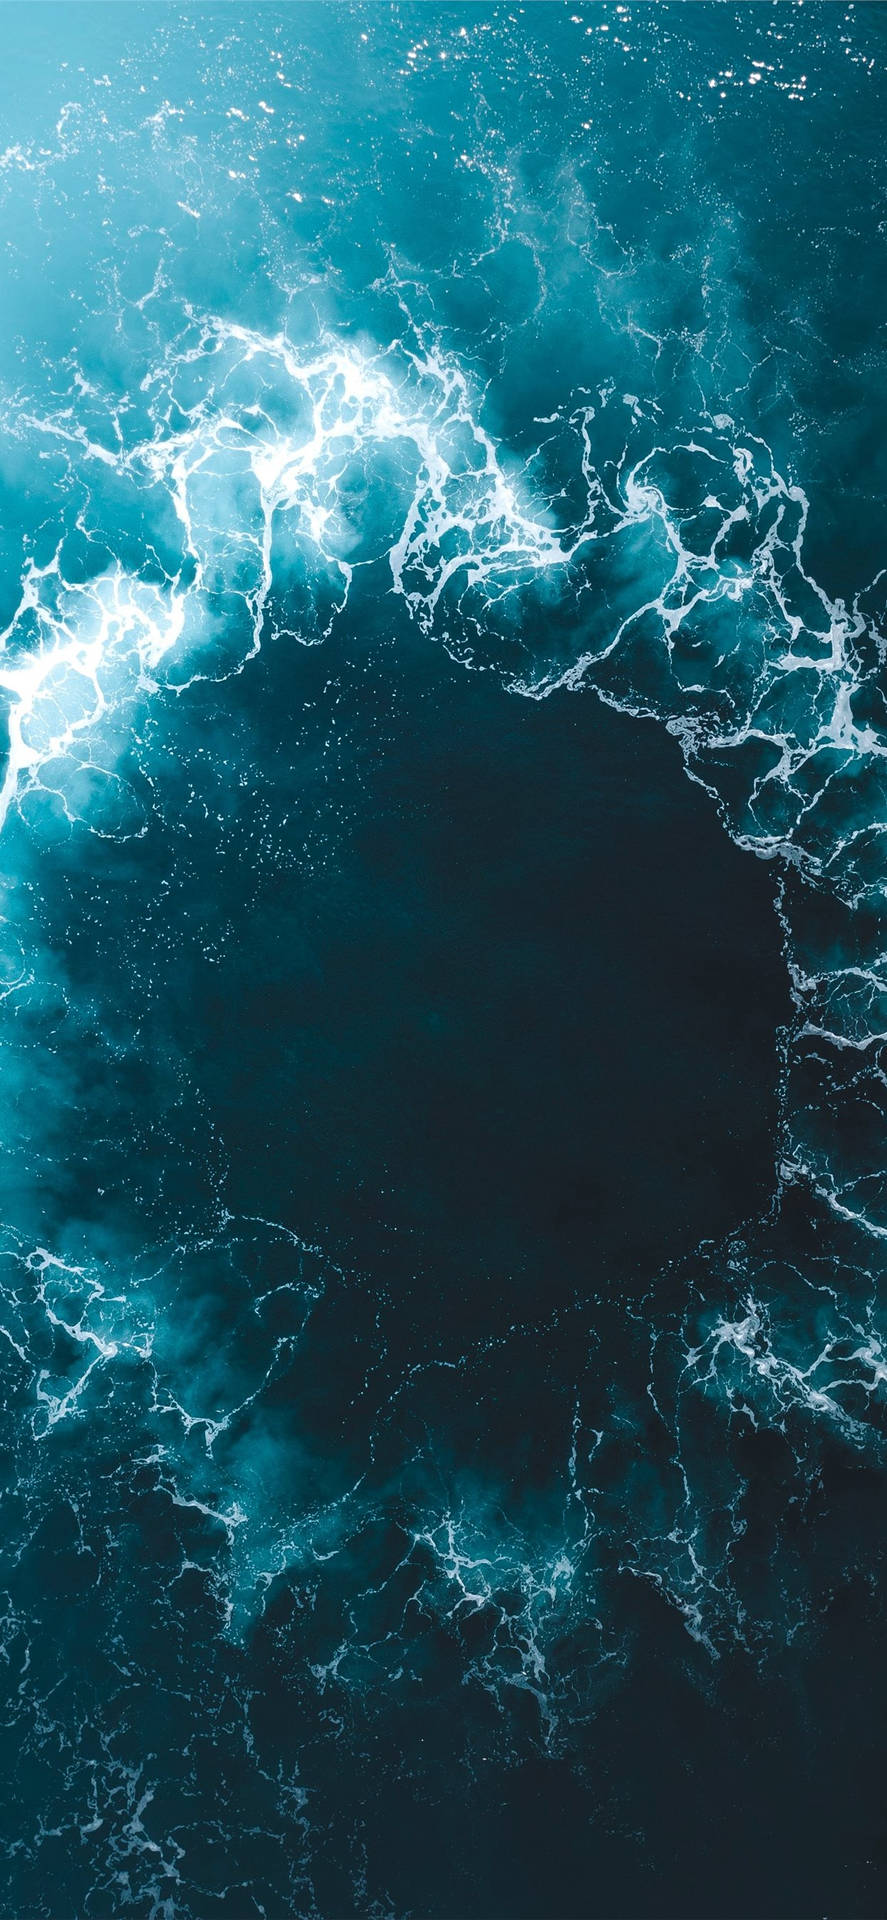 Unleashing Nature's Power – A Spectacular Water Splash Wallpaper